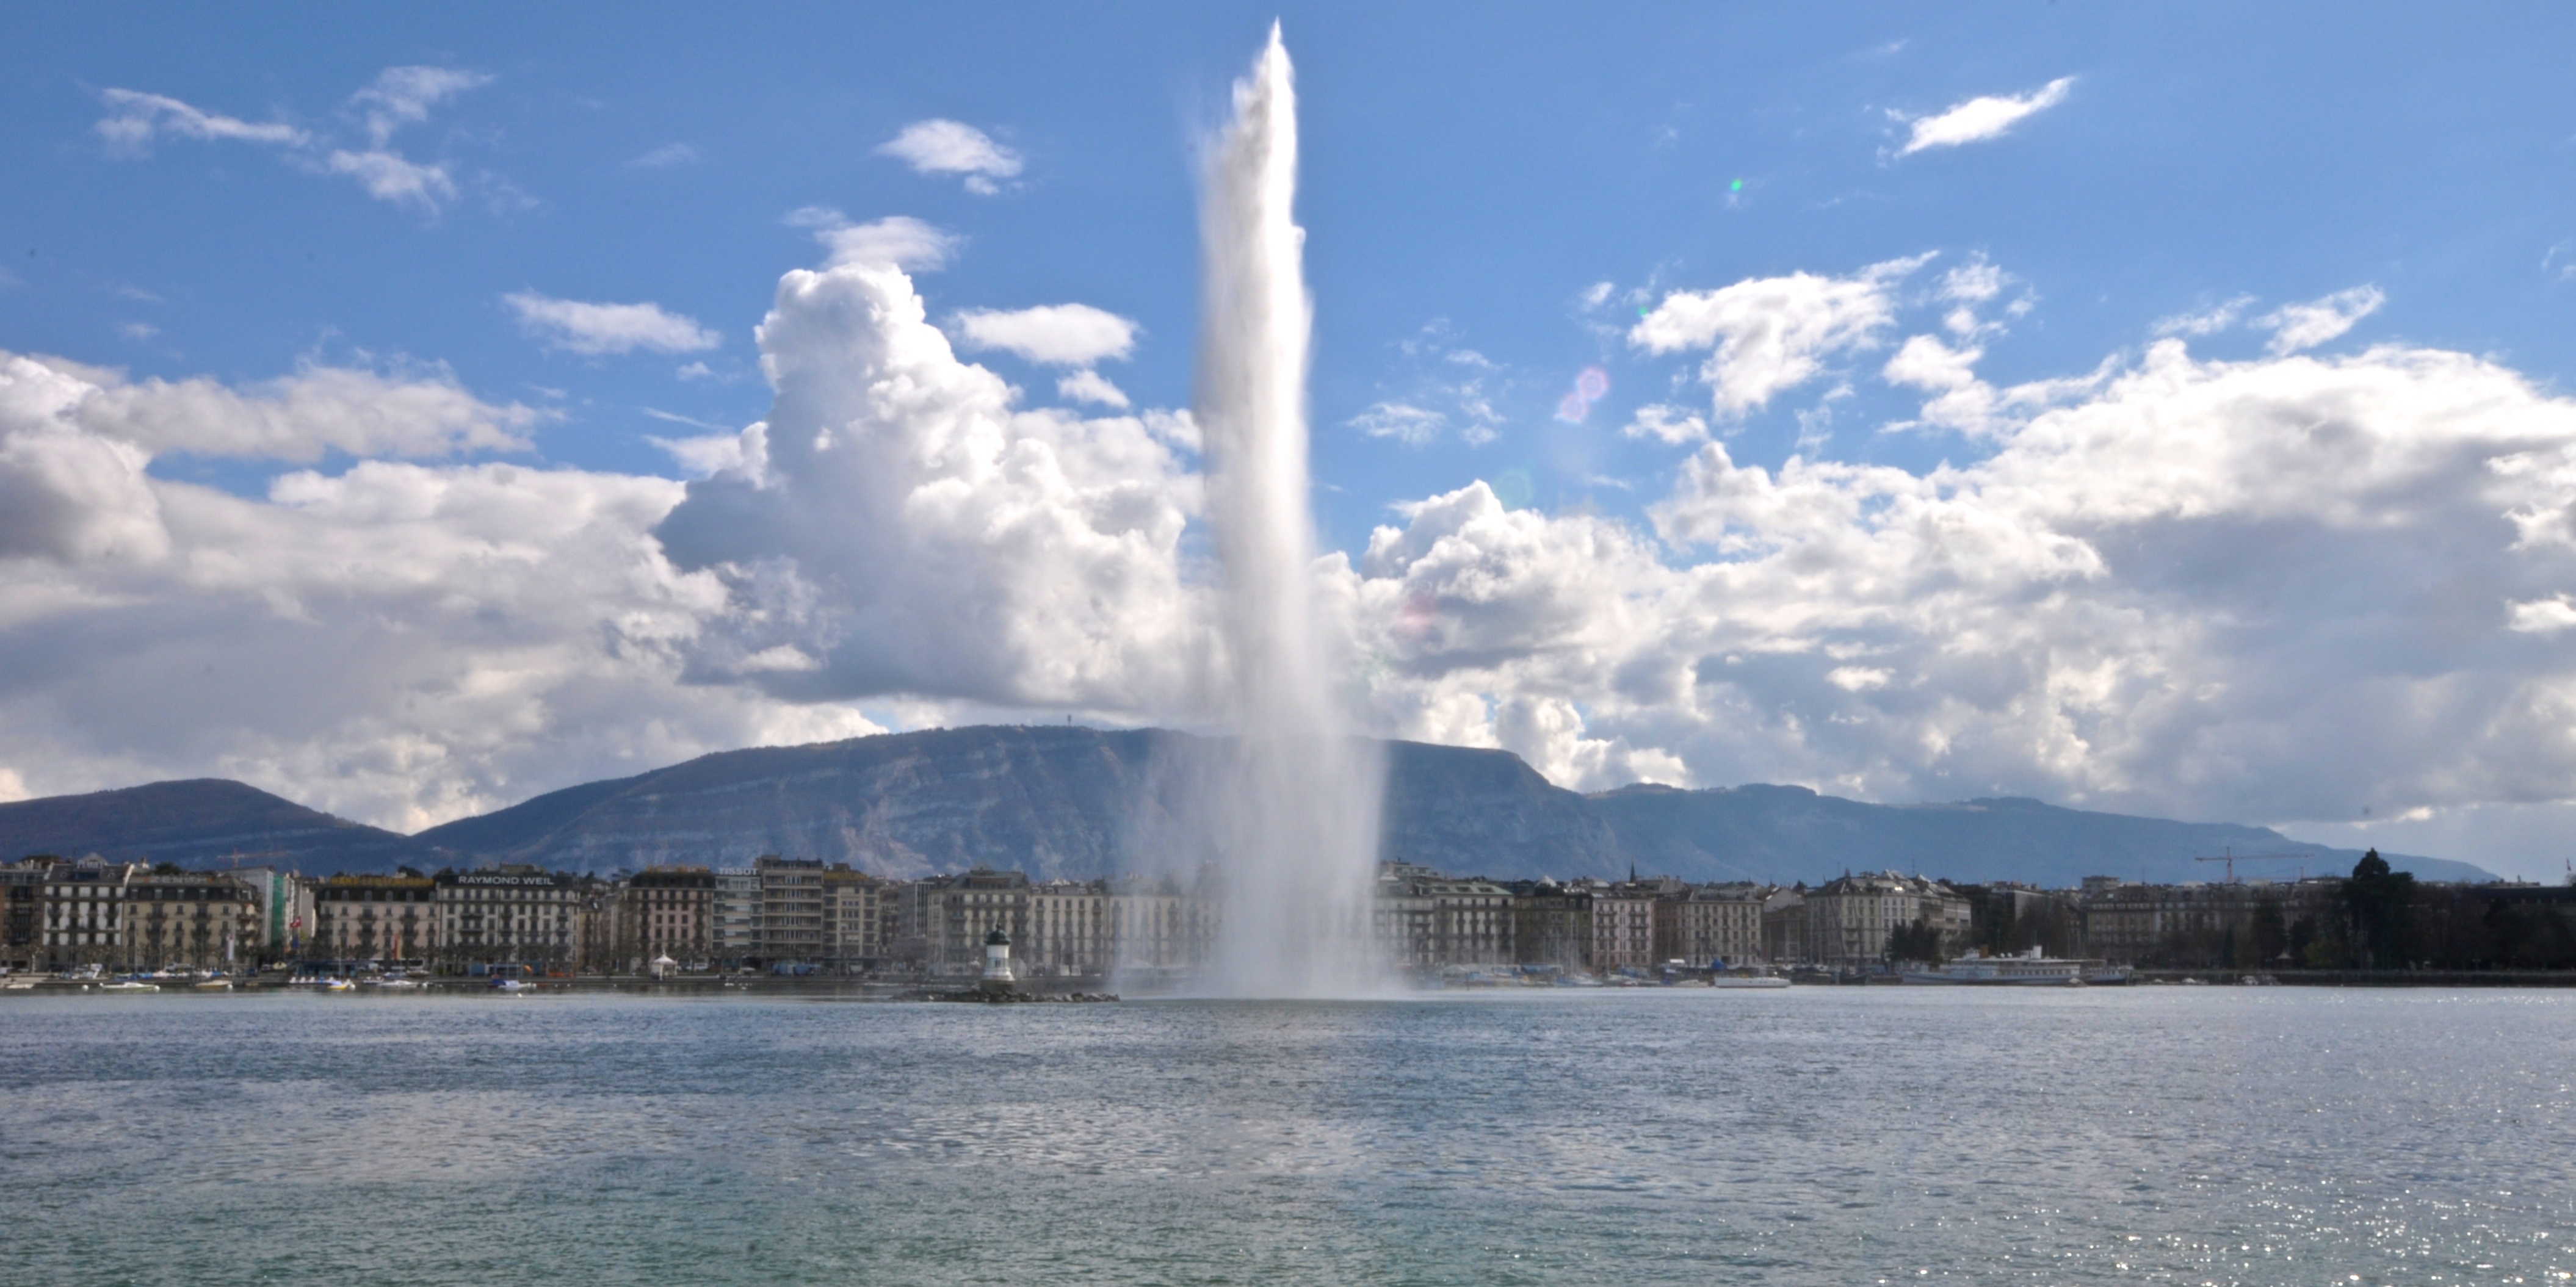 Giant-fountain-looks-awesome-near-lake-geneva